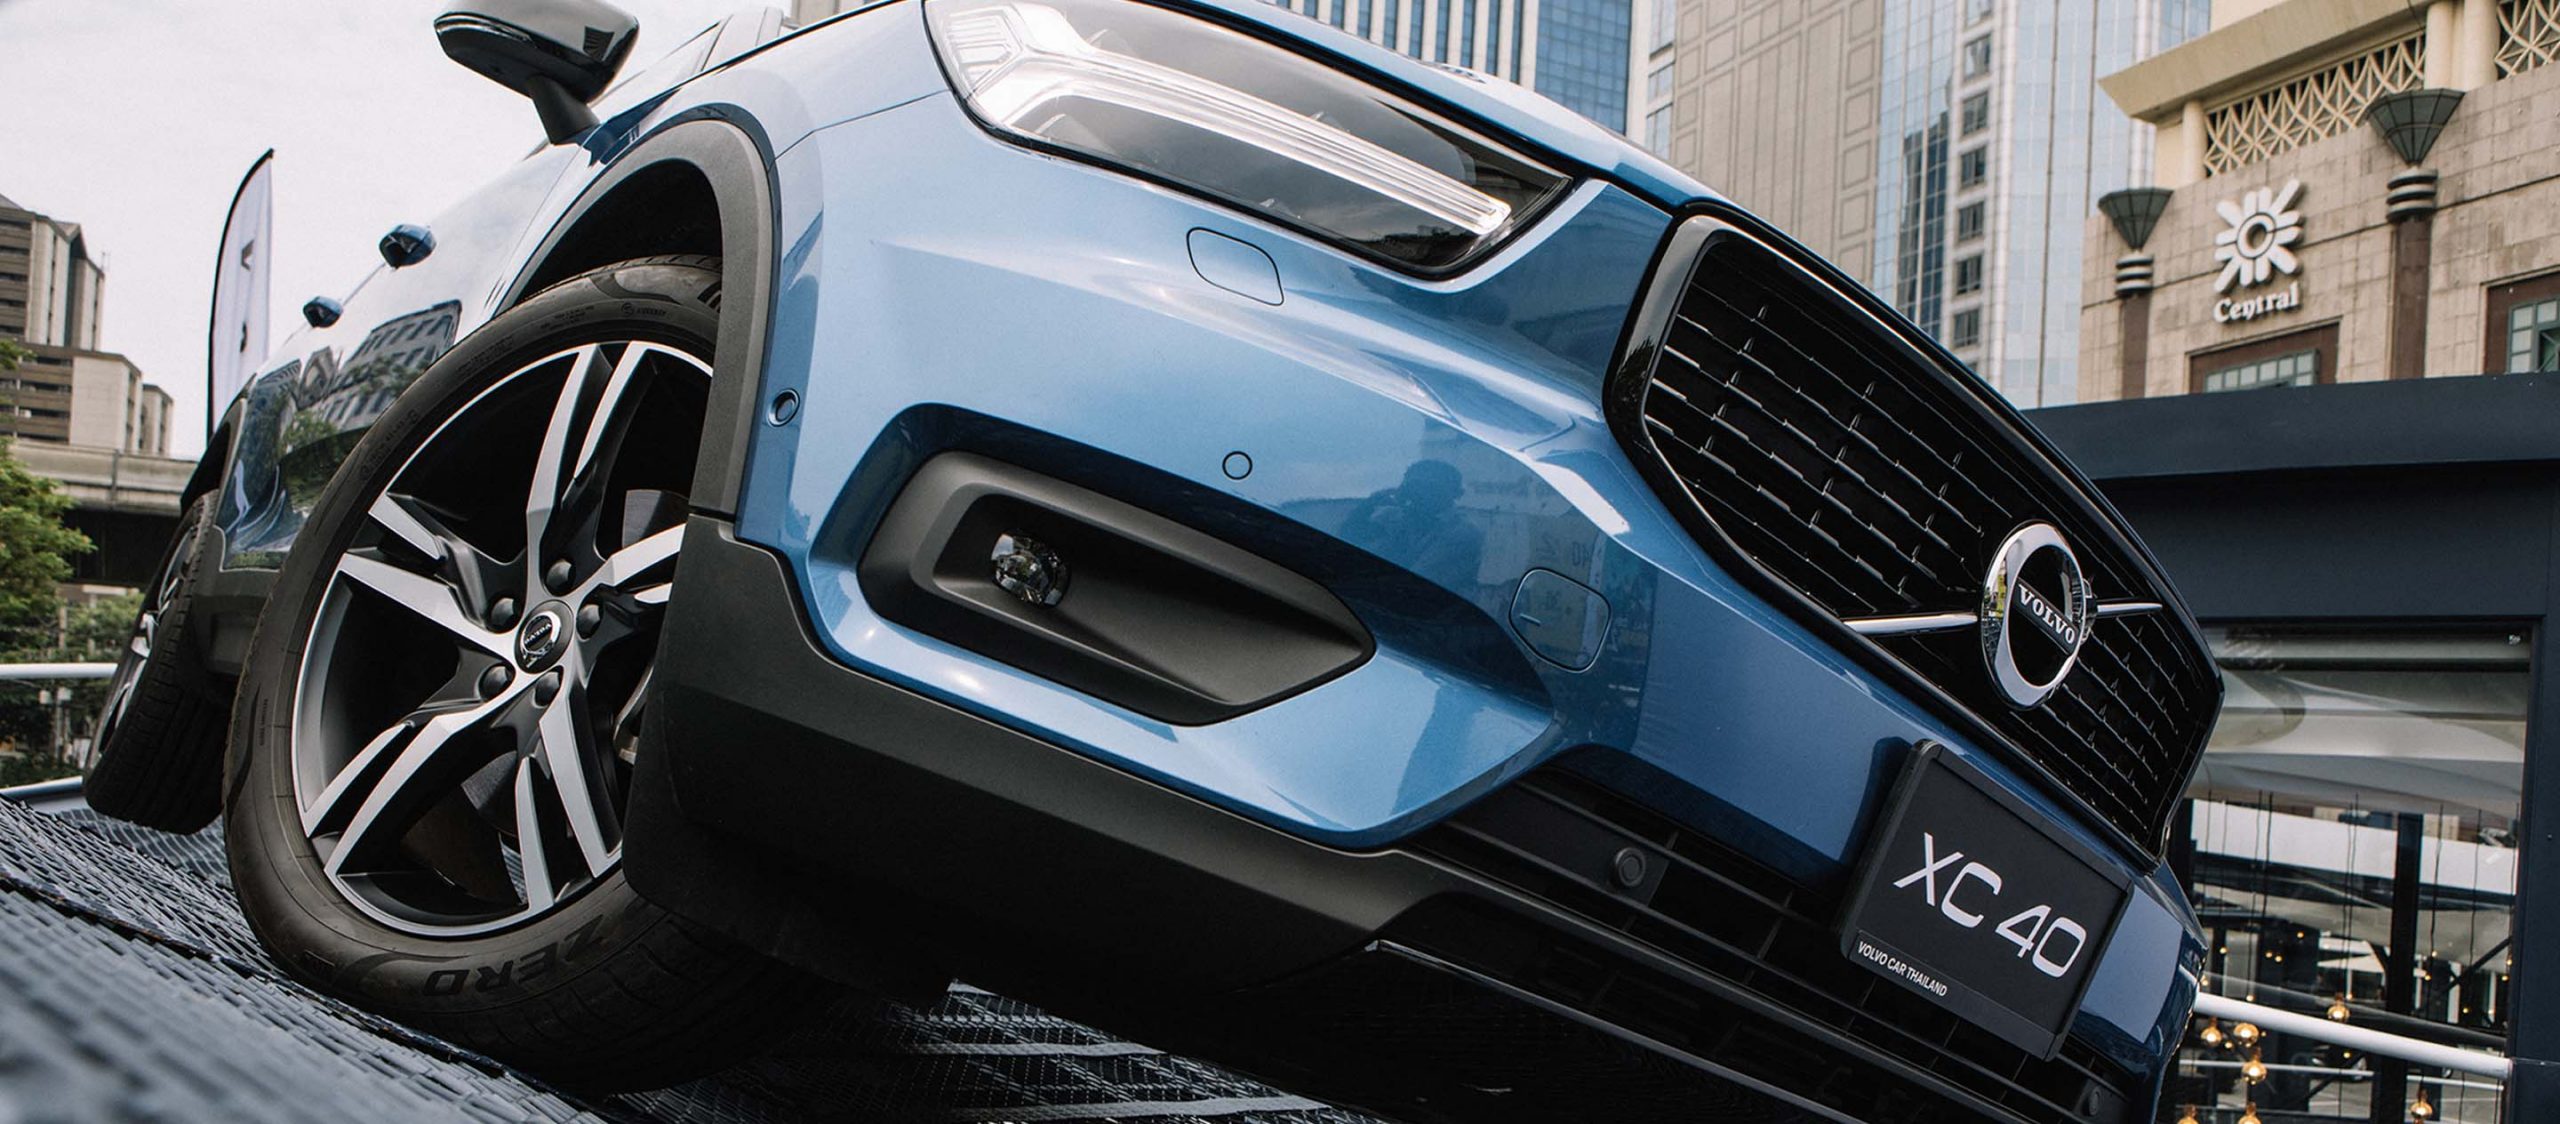 ‘The Volvo Way: Freedom to Experience’ : นวัตกรรมการขับขี่ยุคใหม่ที่ยืนยันว่าการใช้รถก็รักษ์โลกได้